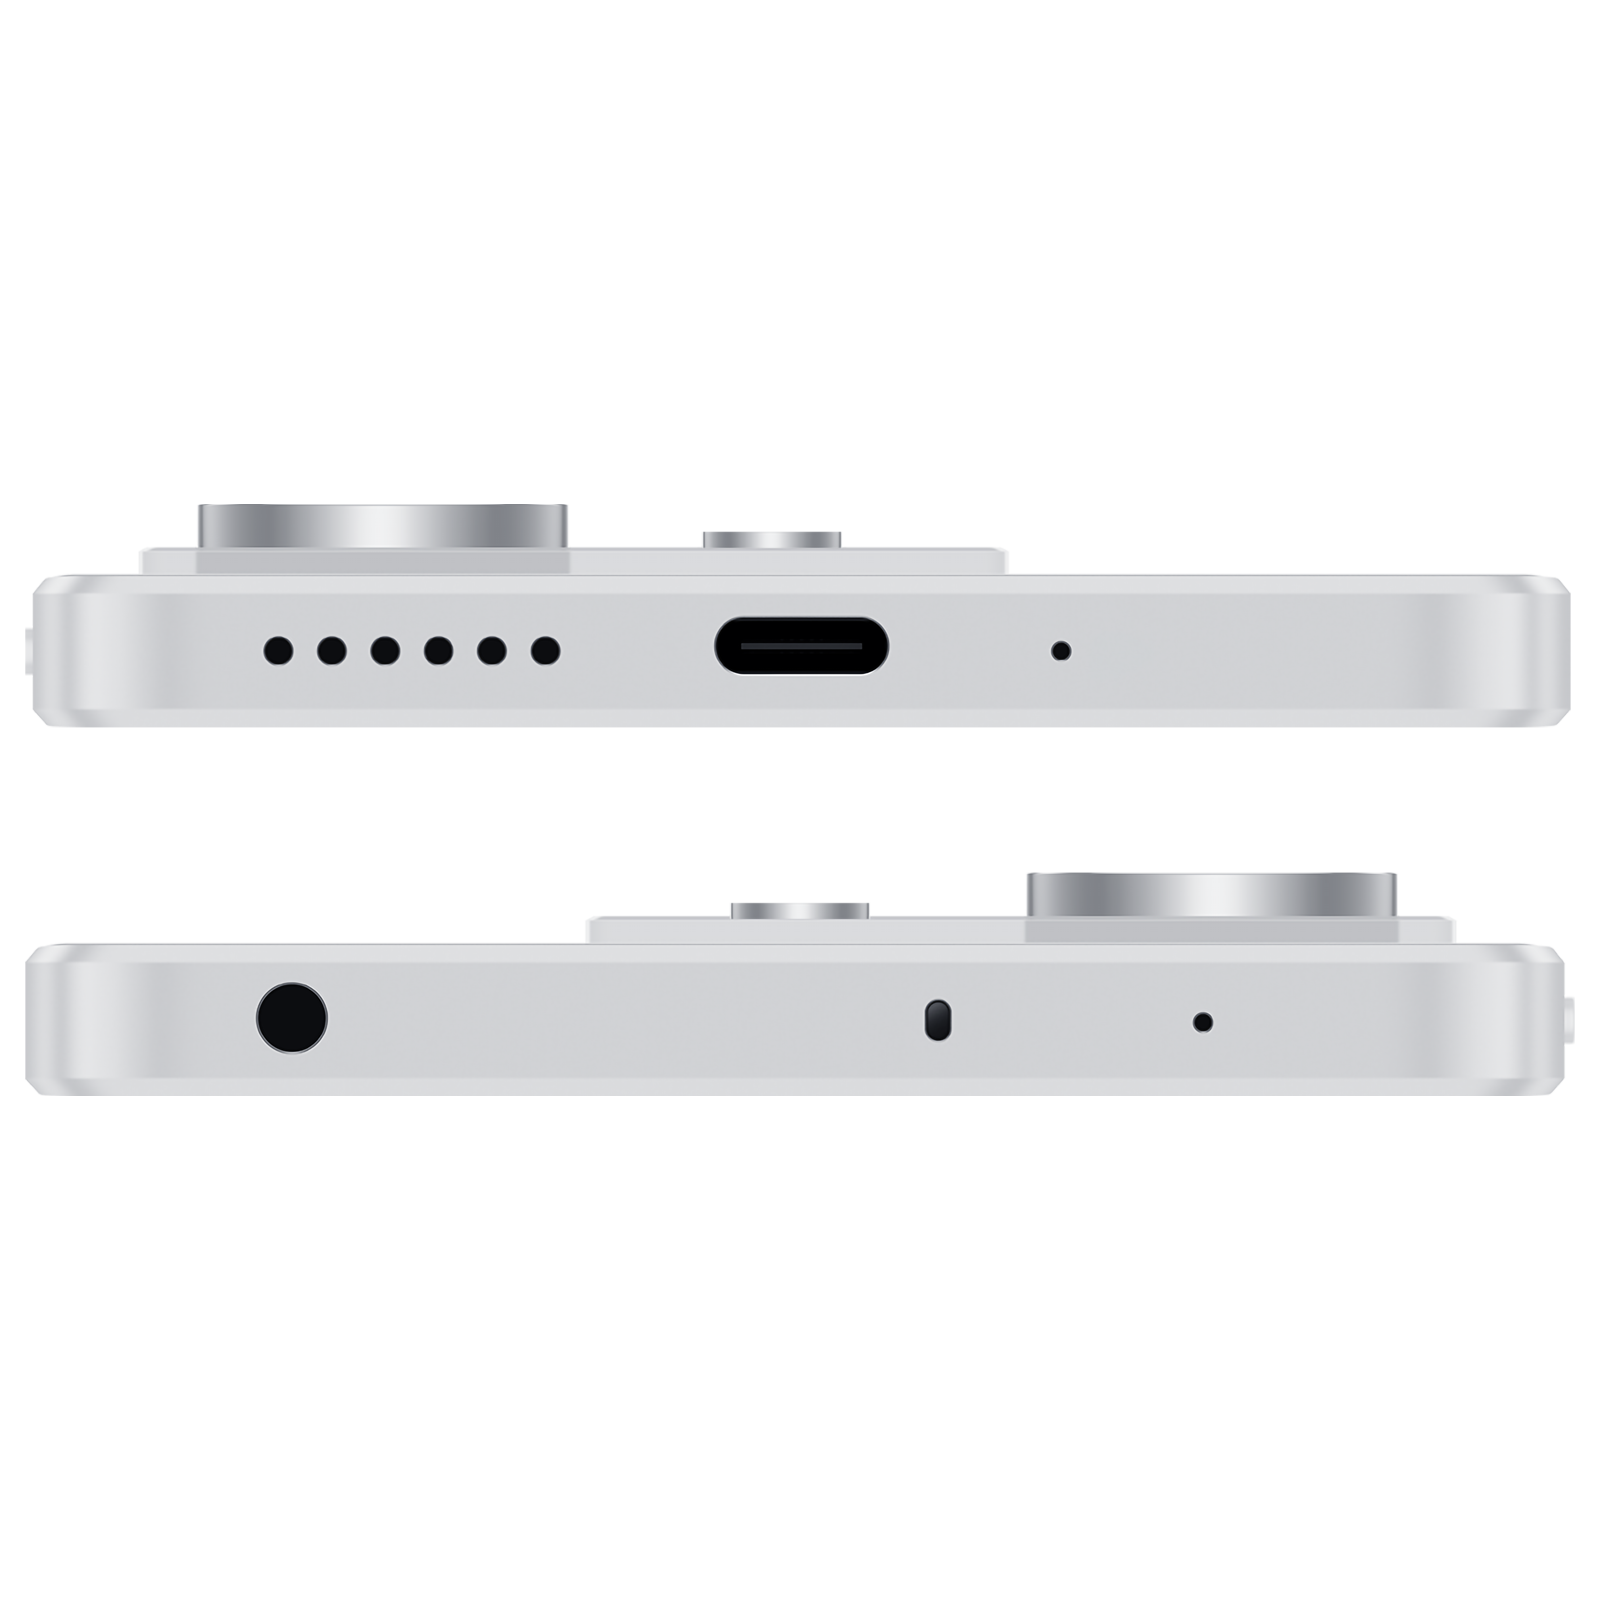 Buy Redmi Note 13 5G (6GB RAM, 128GB, Arctic White) Online - Croma